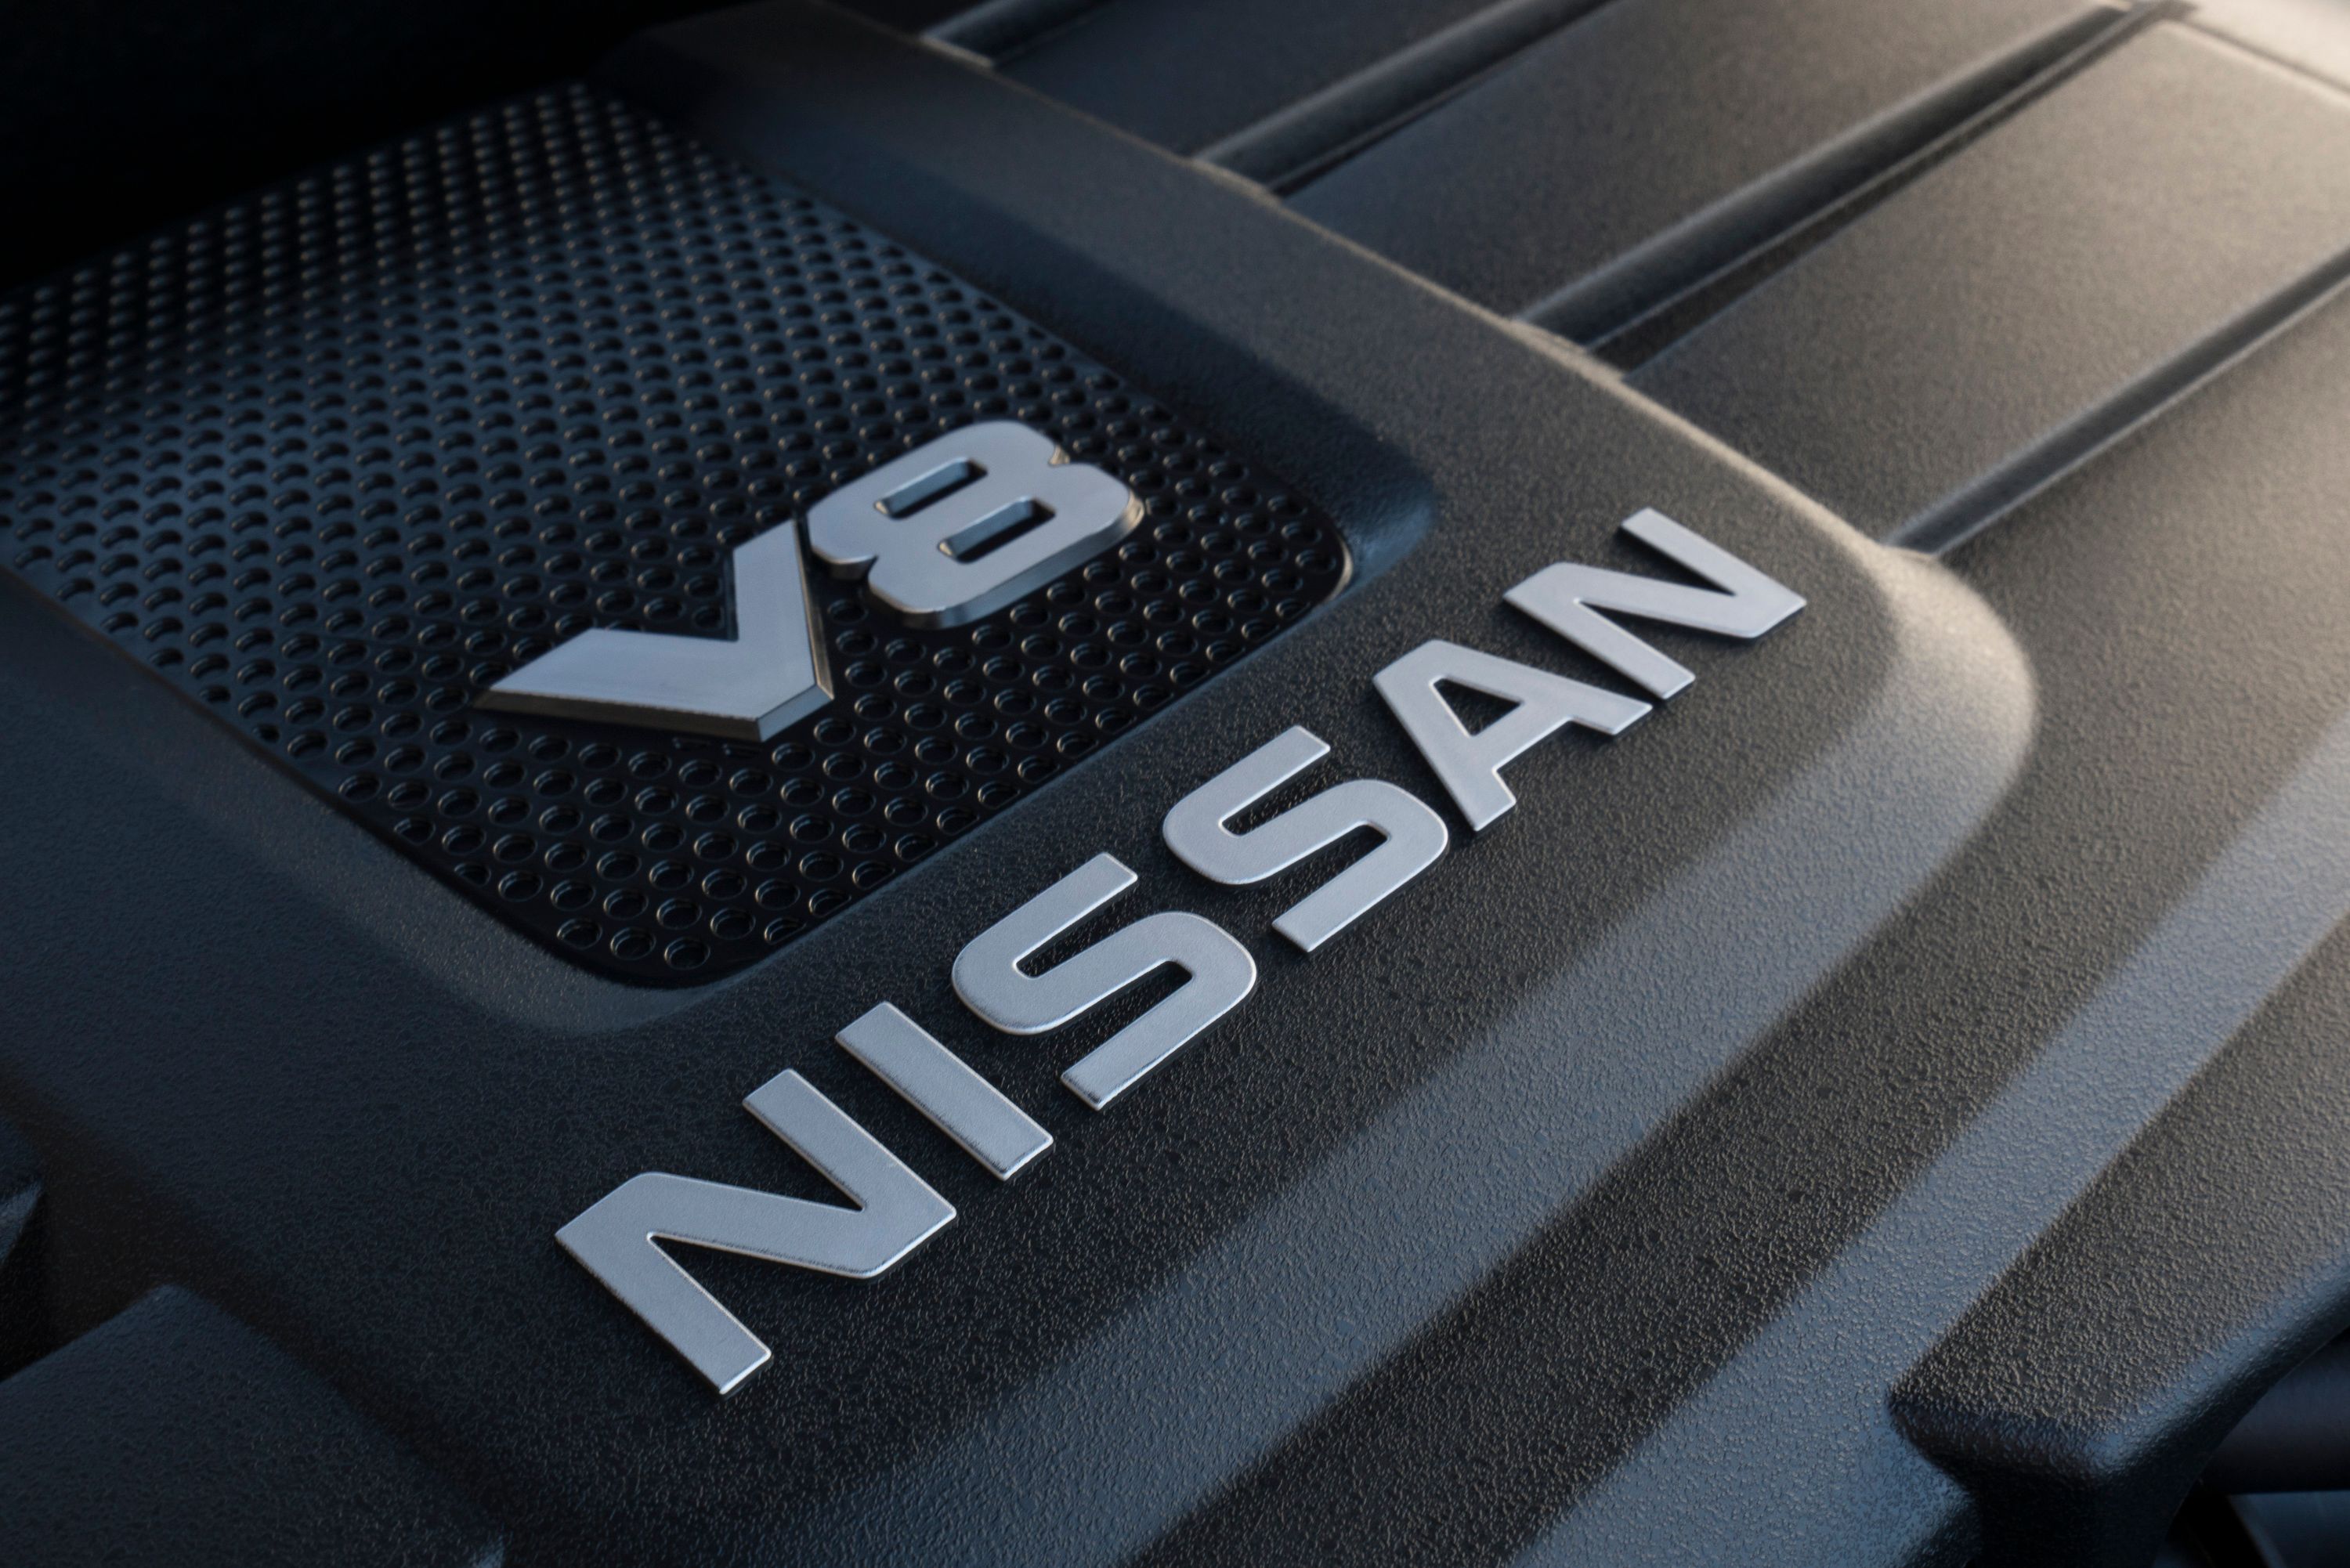 2017 Nissan Titan XD Single Cab